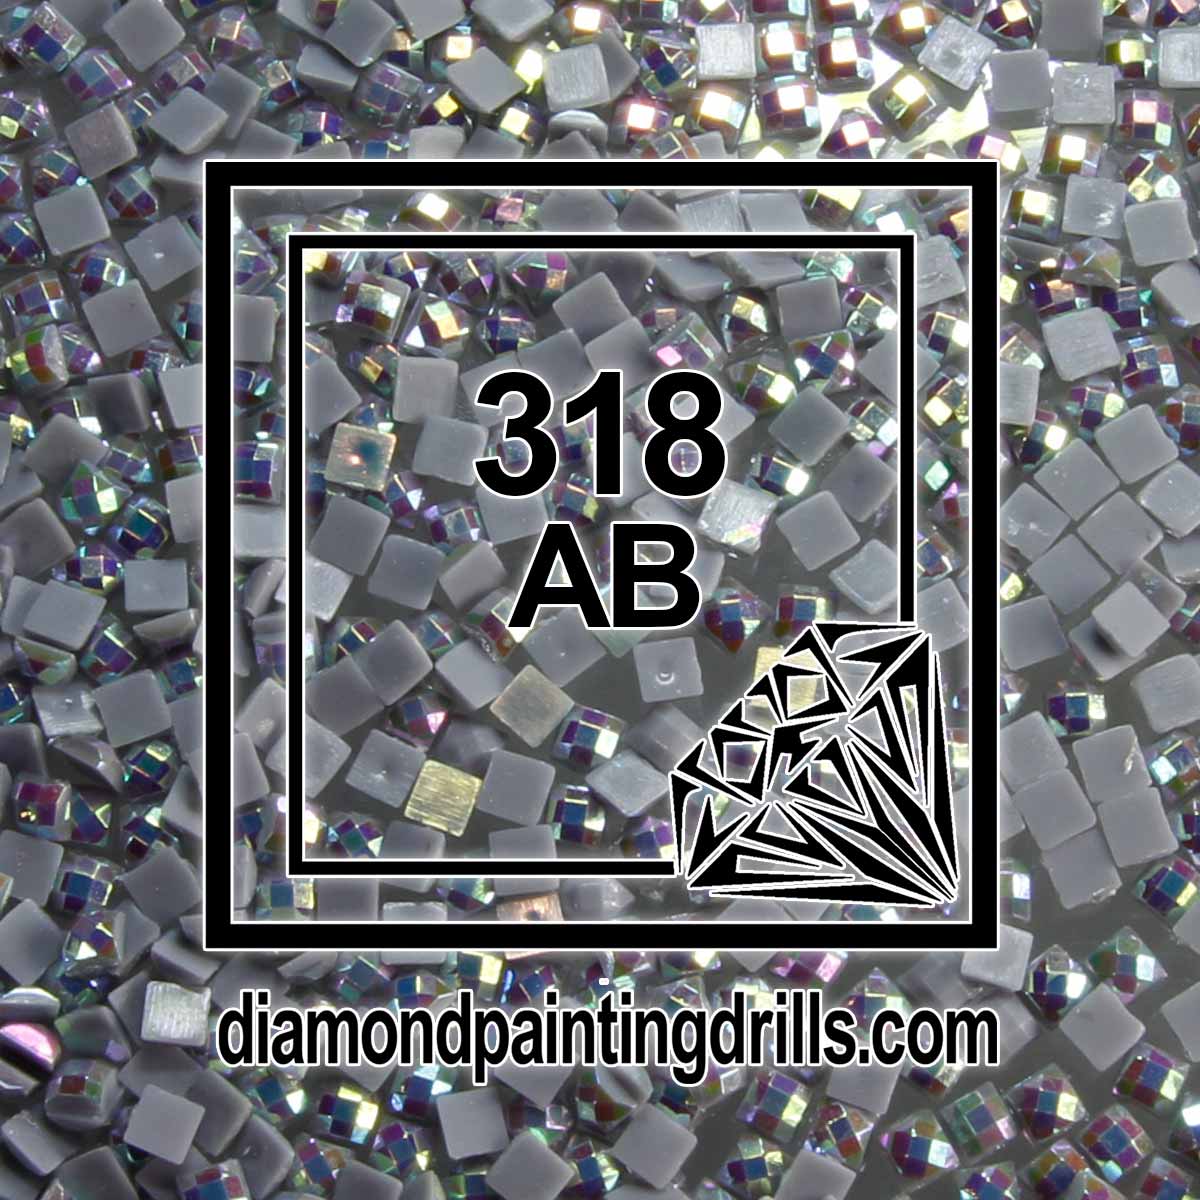 318 Steel Gray - Light - Square AB Drills - Diamond Painting Drills